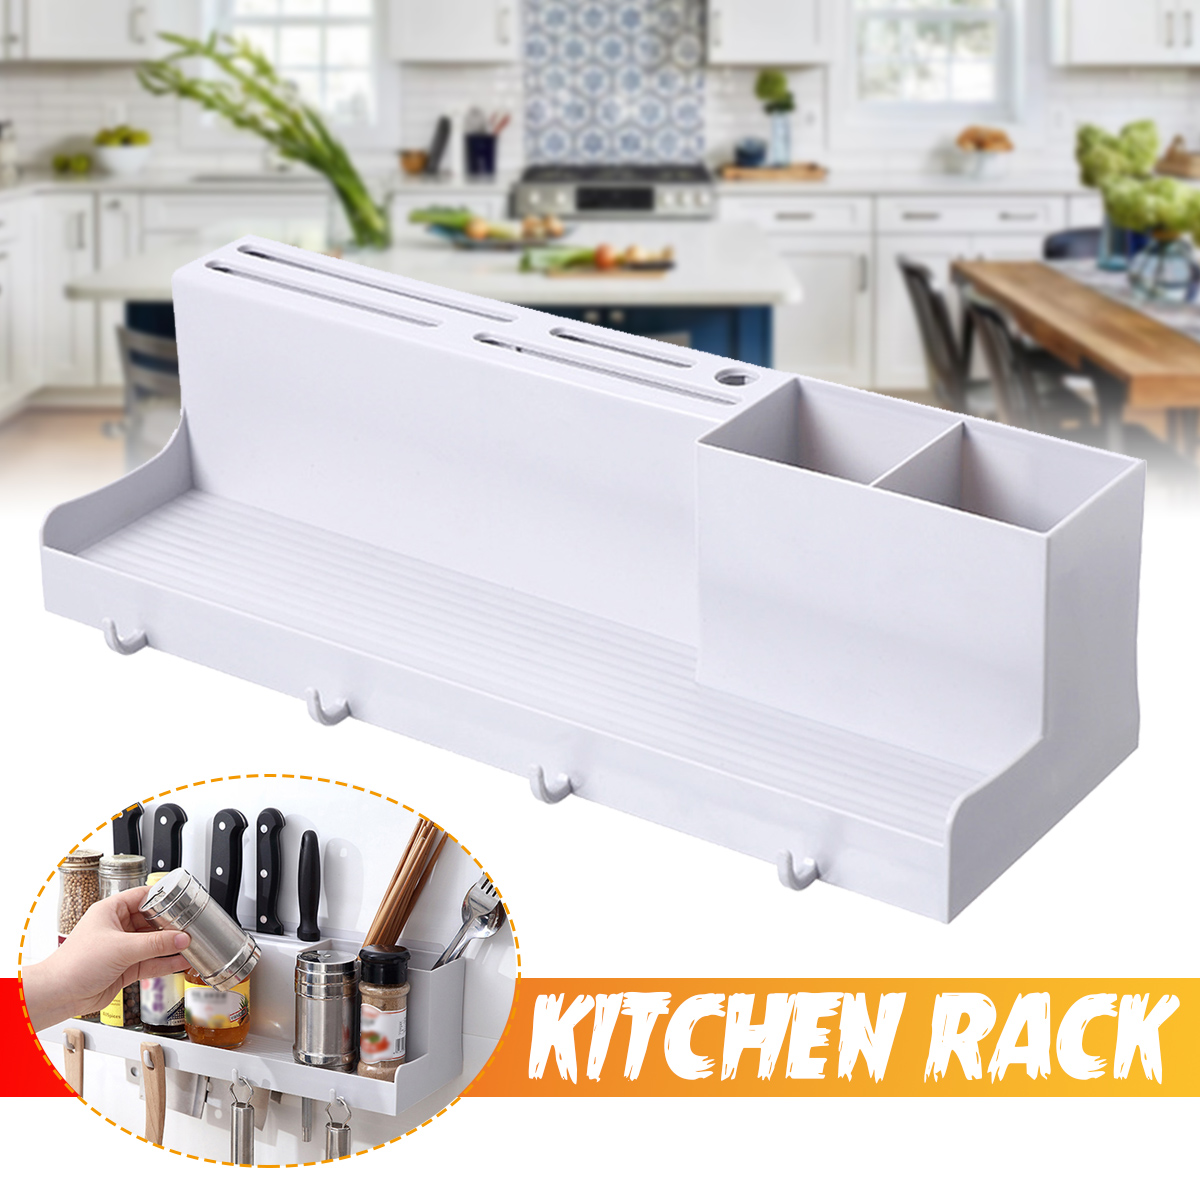 Kitchen-Wall-Mounted-Rack-Storage-Holder-Cutter-Spice-Seasoning-Jar-Multifunctional-Shelf-Organizer-1759322-2